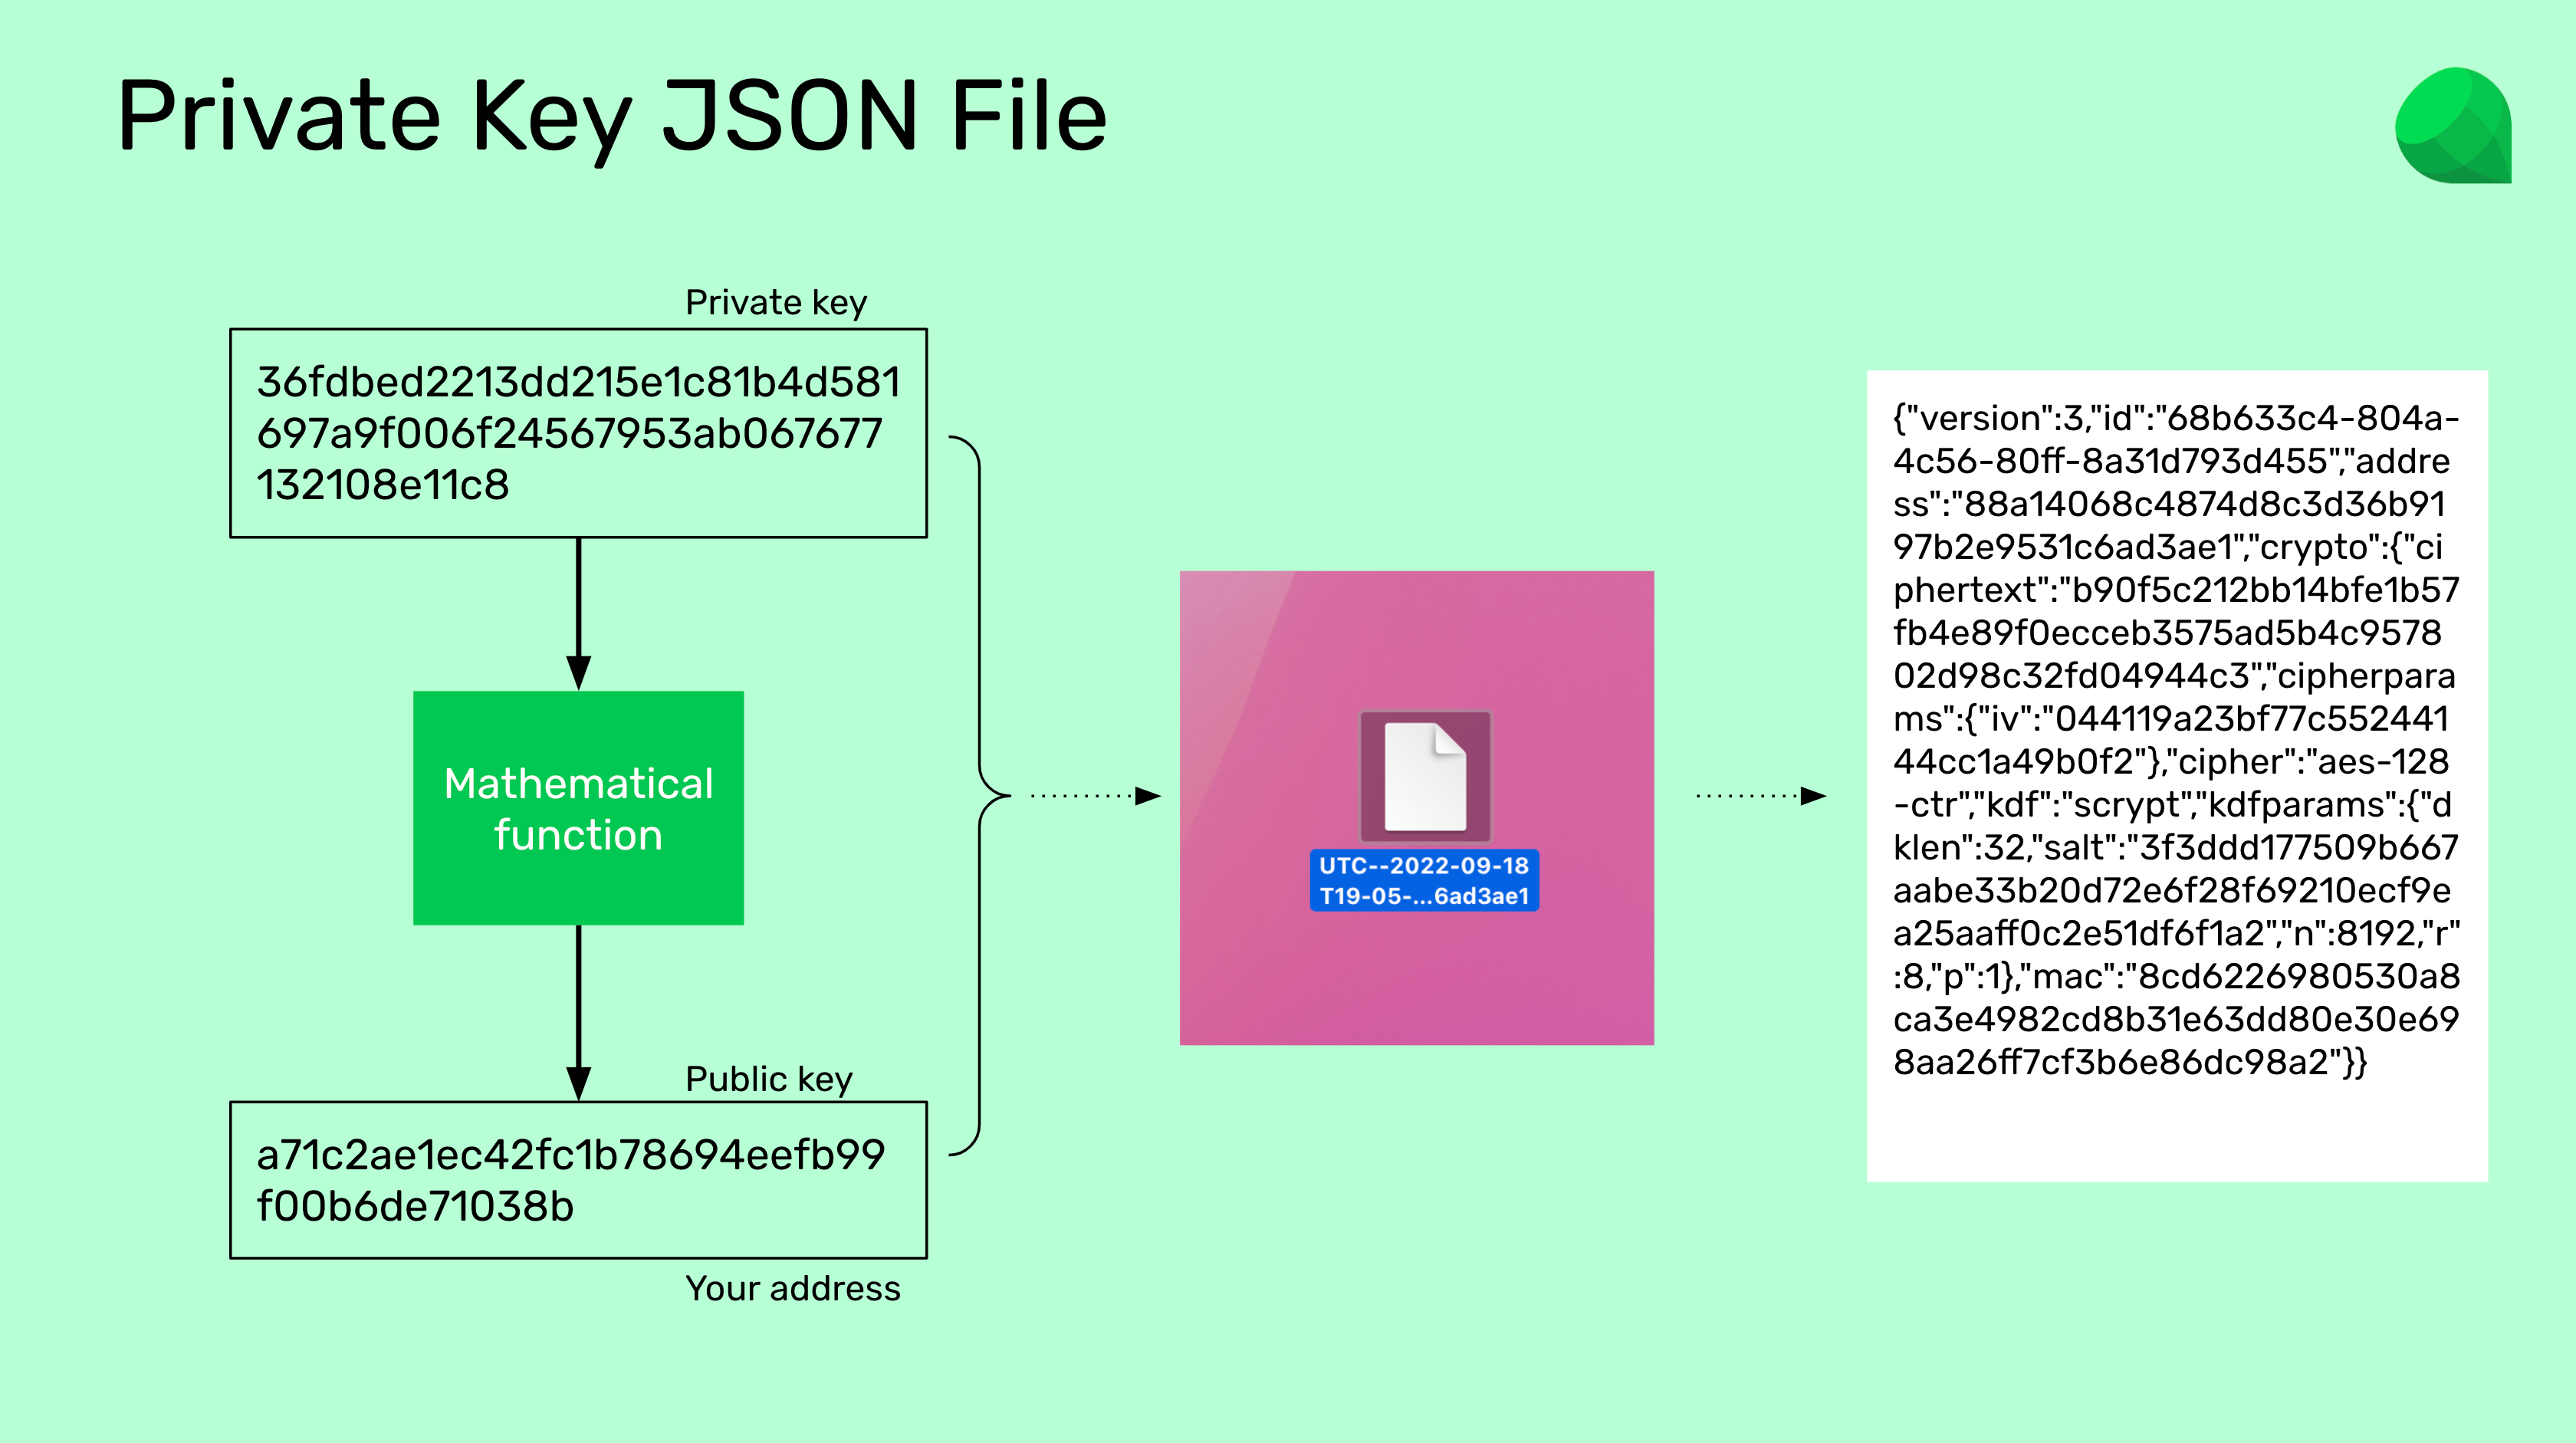 Private key JSON file.